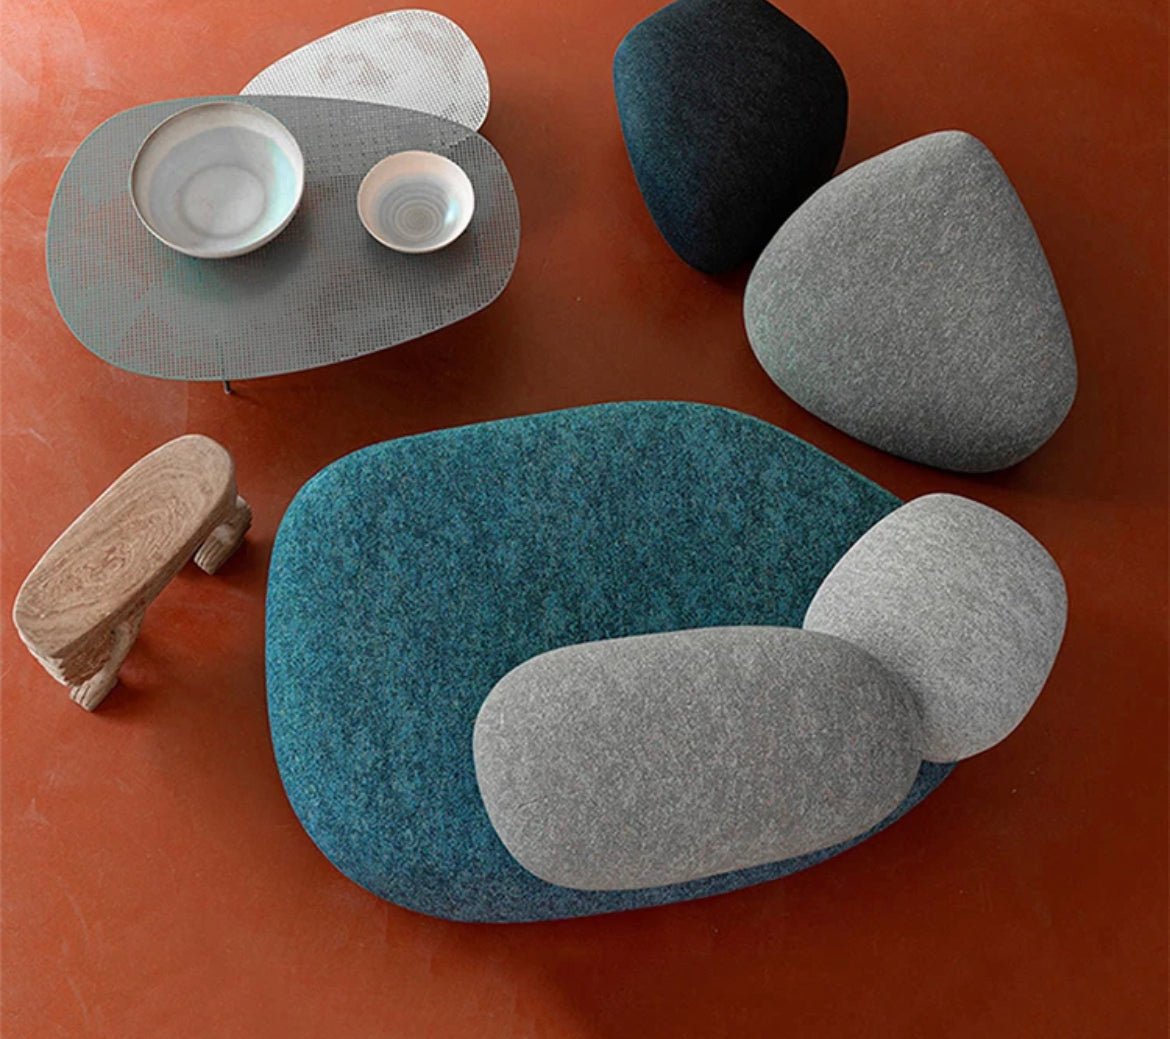 New Design Sofa Unique Stone Shape Living Waiting Room Fabric Sofas